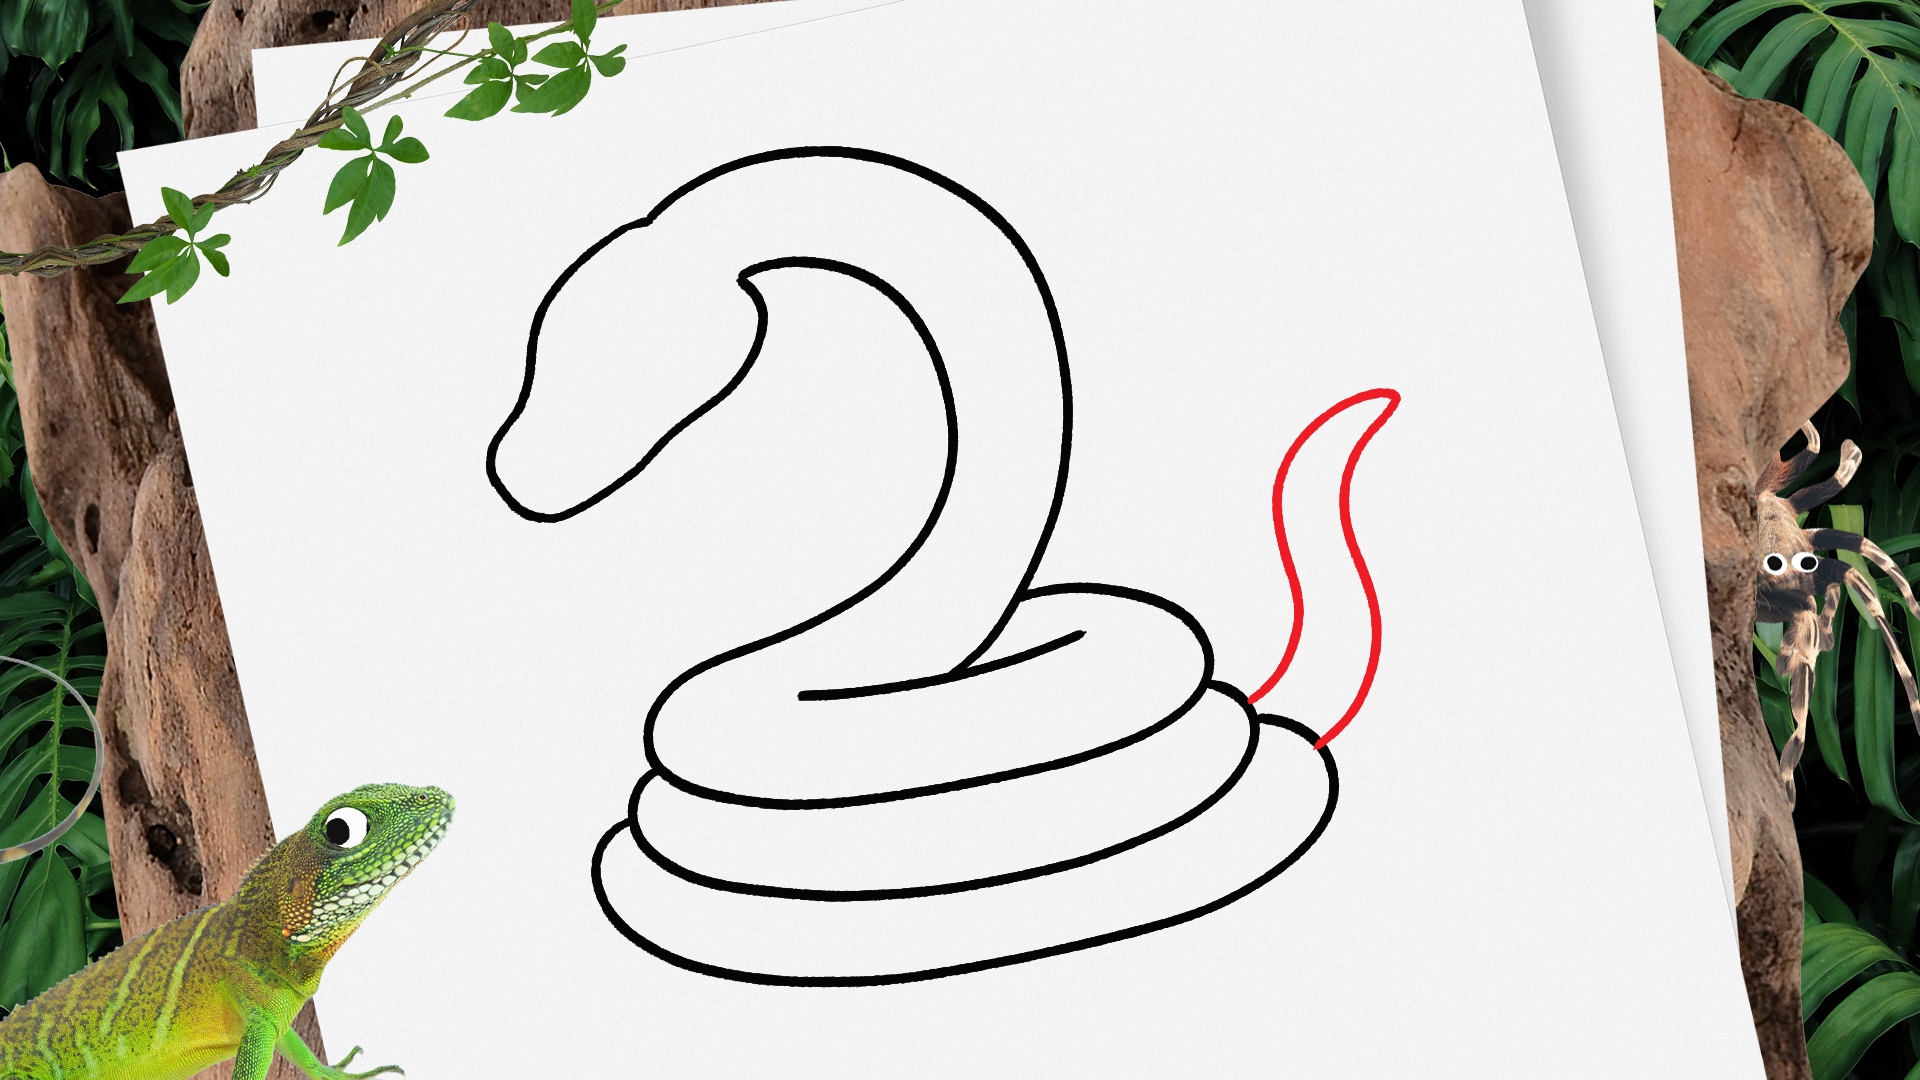 easy drawings of snakes